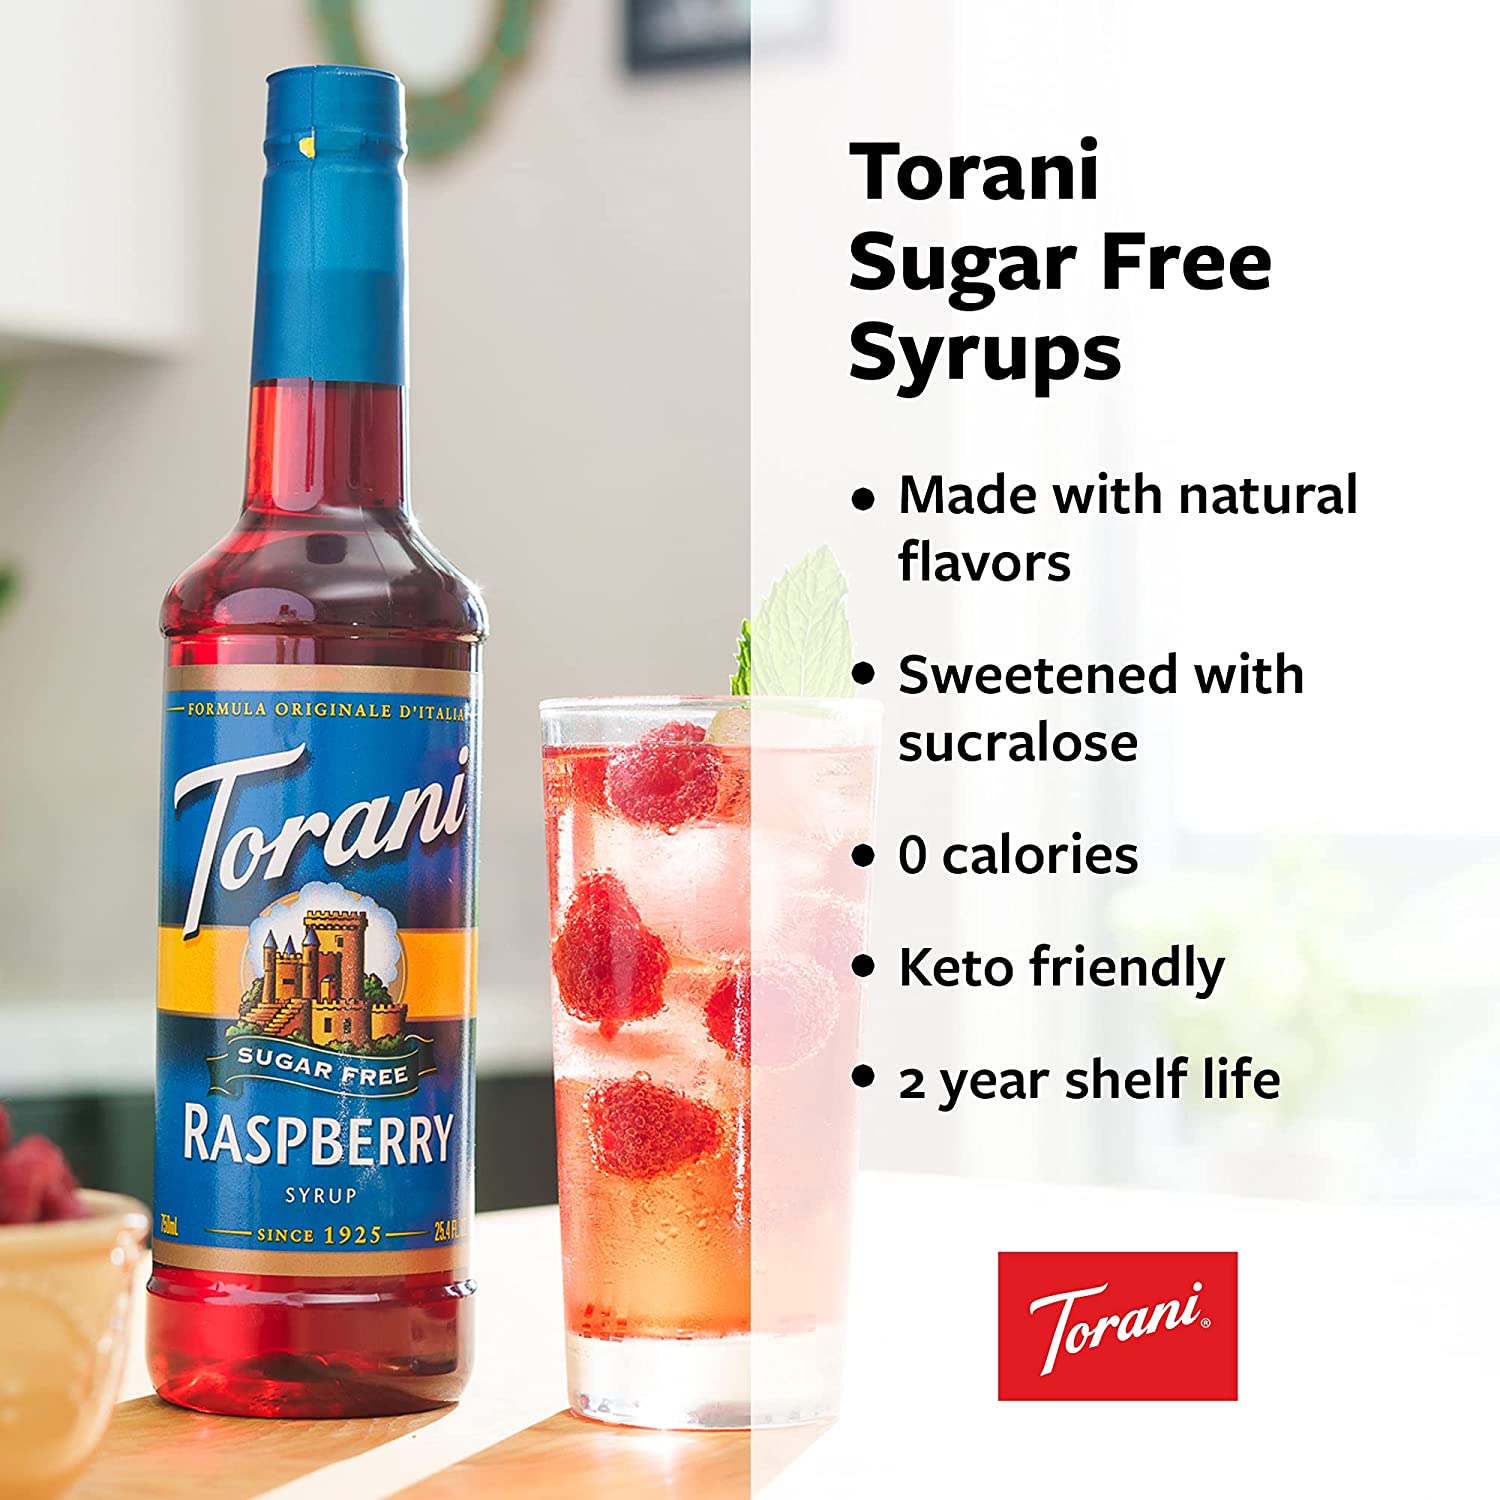 Torani Sugar Free Flavored Syrups - 750 ml Glass Bottle: Raspberry